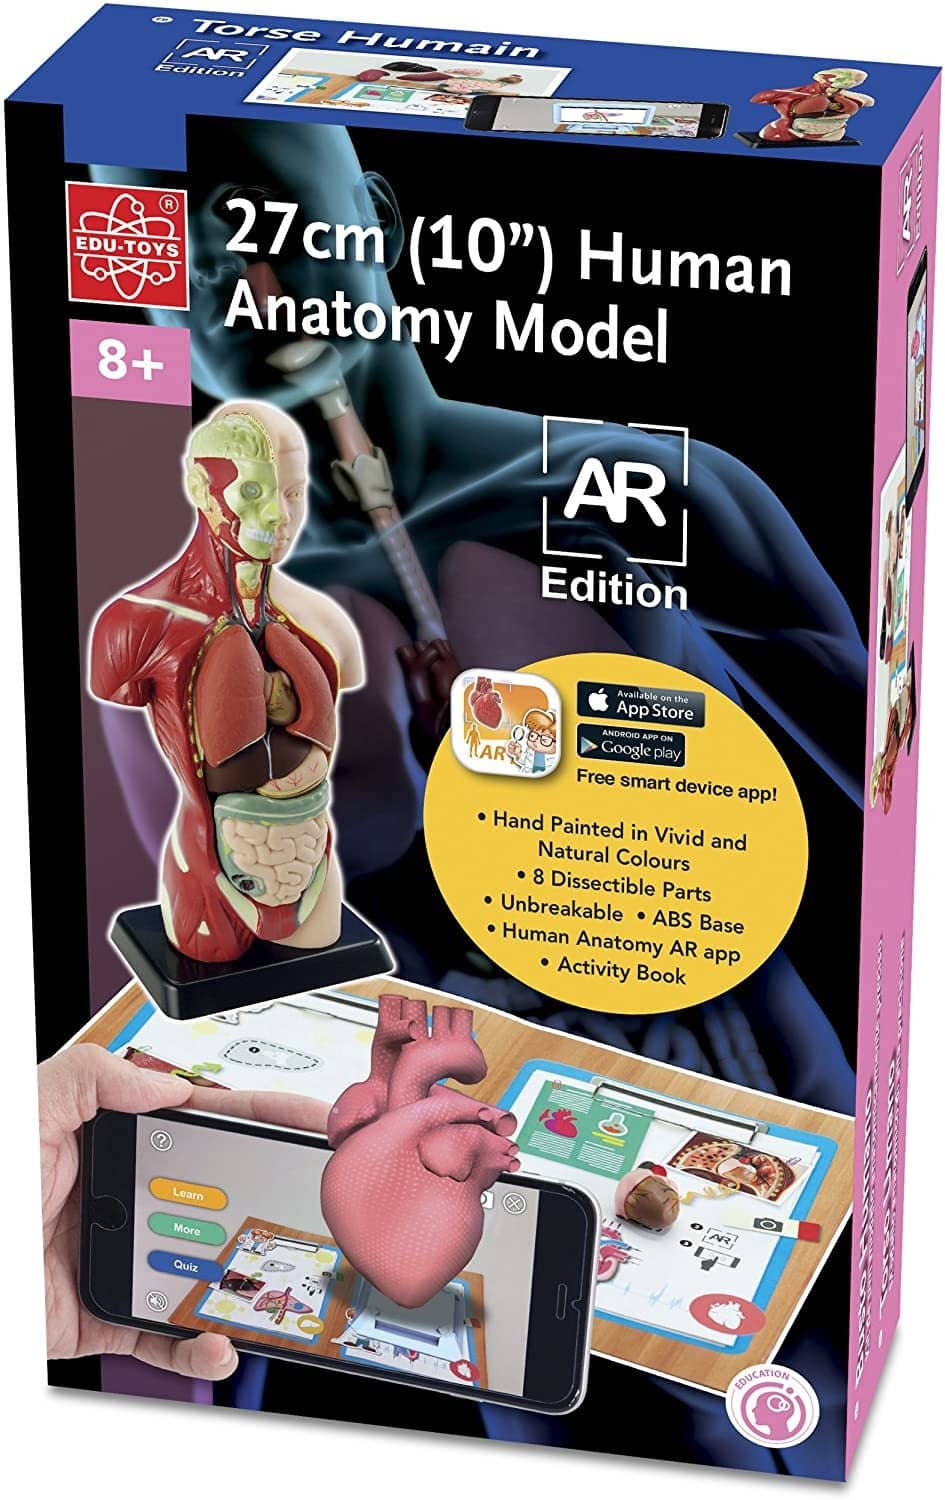 Human Anatomy Model 10"-Kidding Around NYC